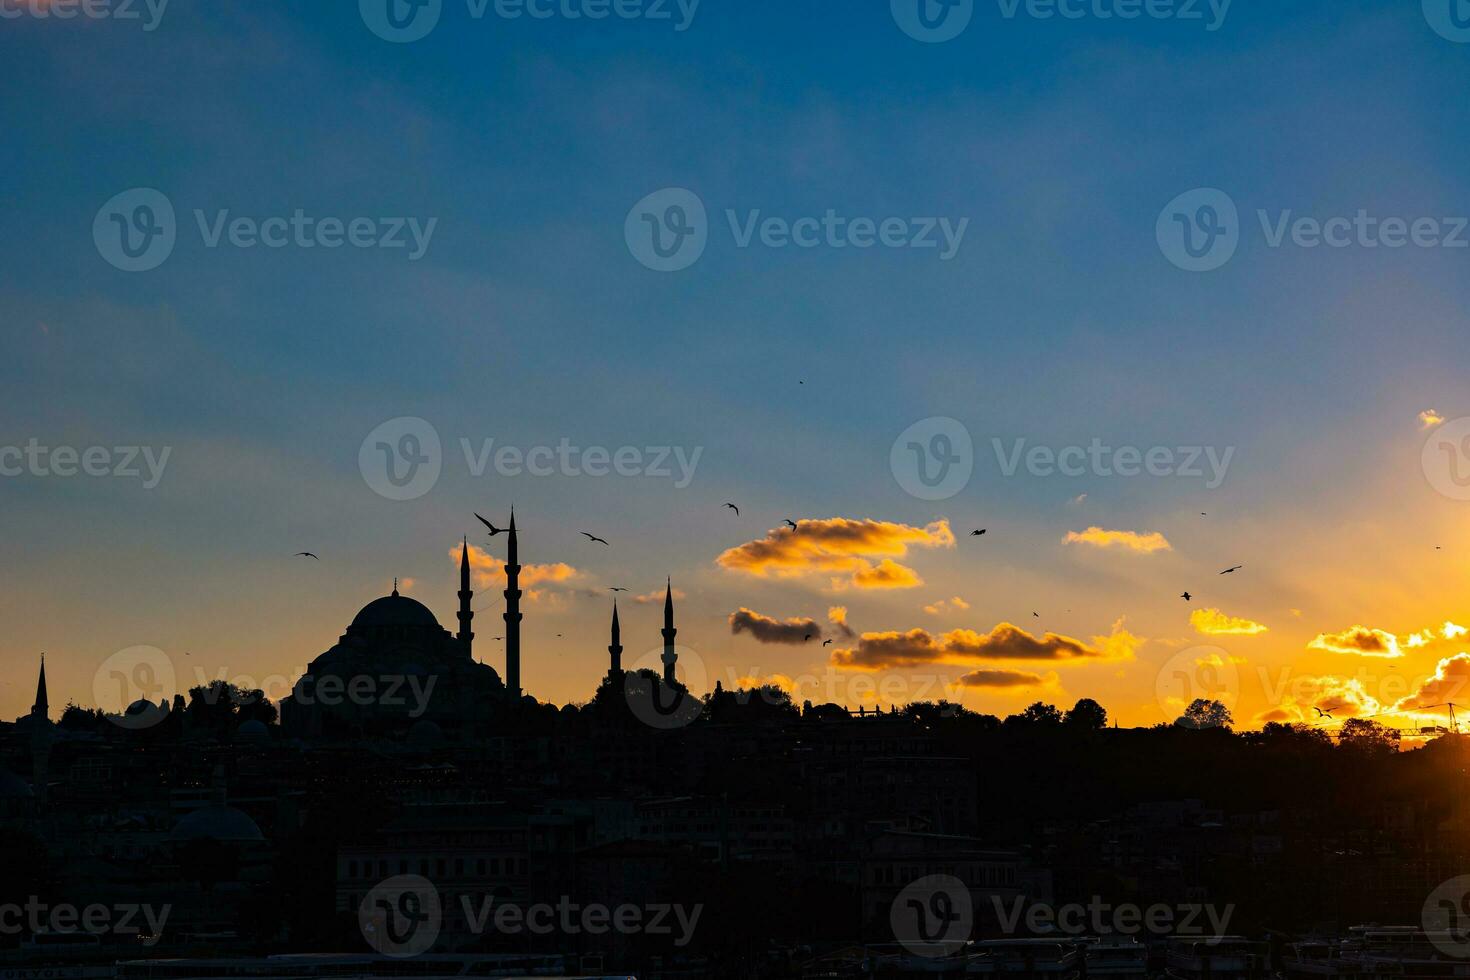 Istanbul silhouet Bij zonsondergang. suleymaniye moskee en bewolkt lucht foto